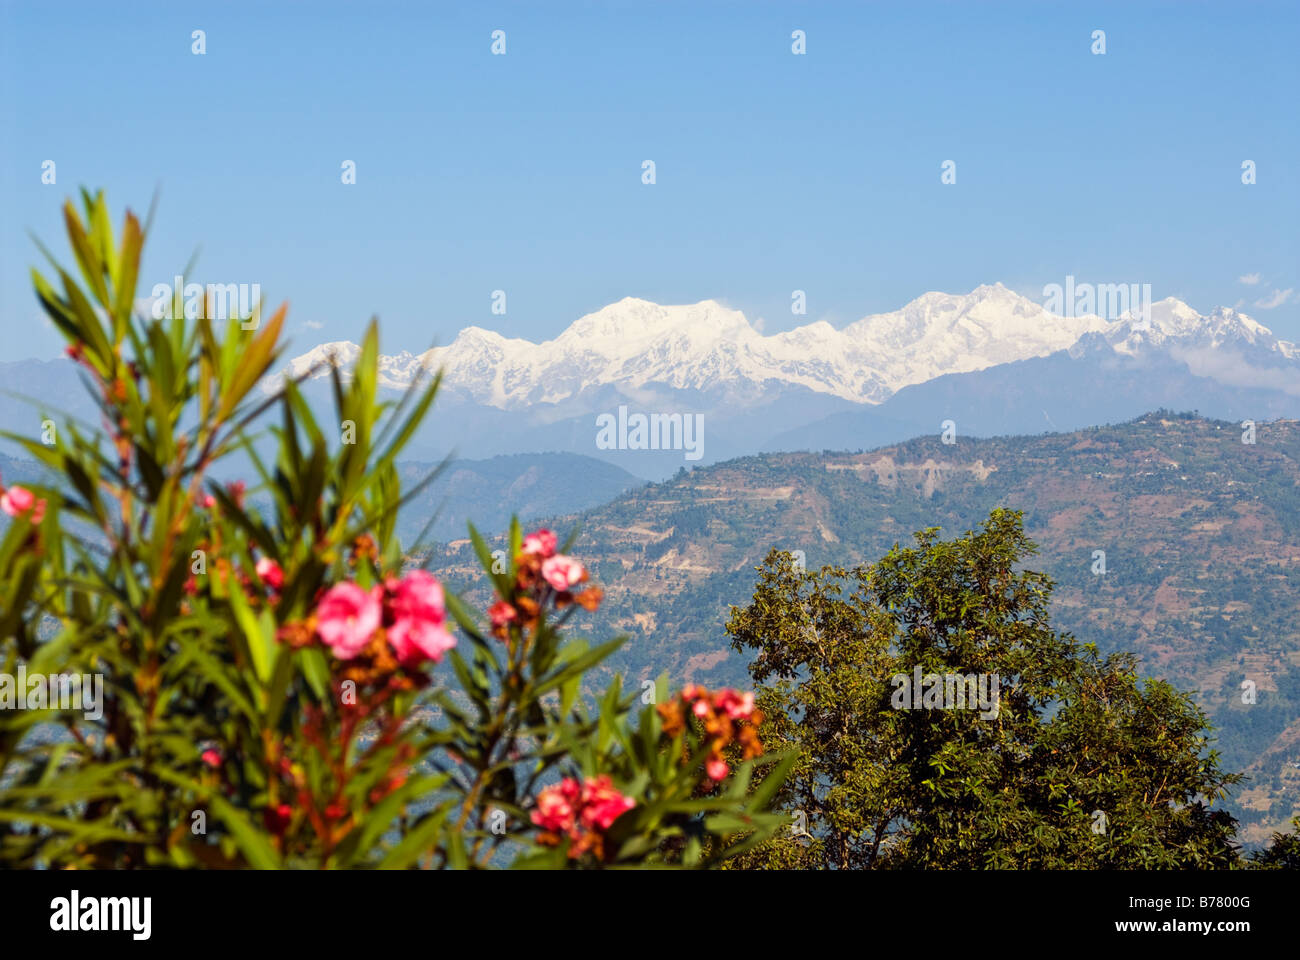 Peaks of the Kangchenjunga mountain range, Sikkim, seen from the terrace at Glenburn Tea Estate, Darjeeling, India. Stock Photo